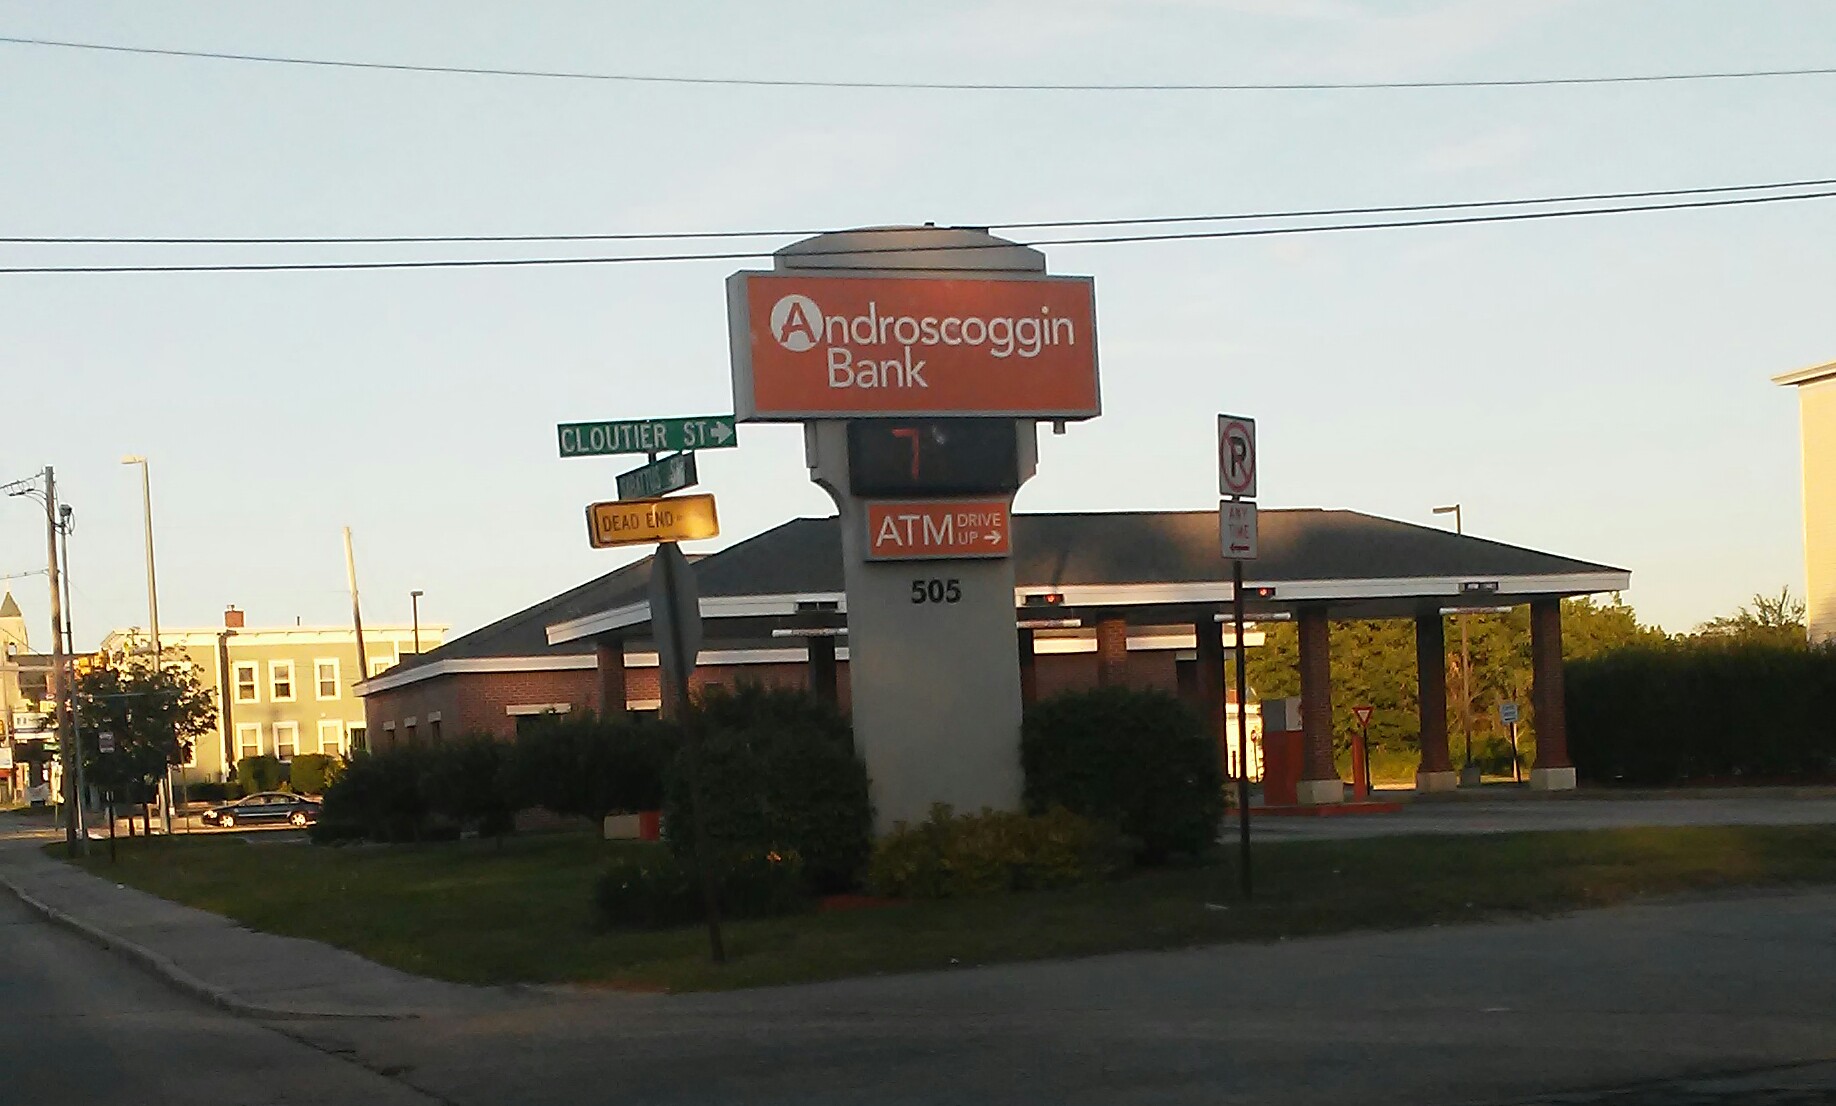 Androscoggin Bank